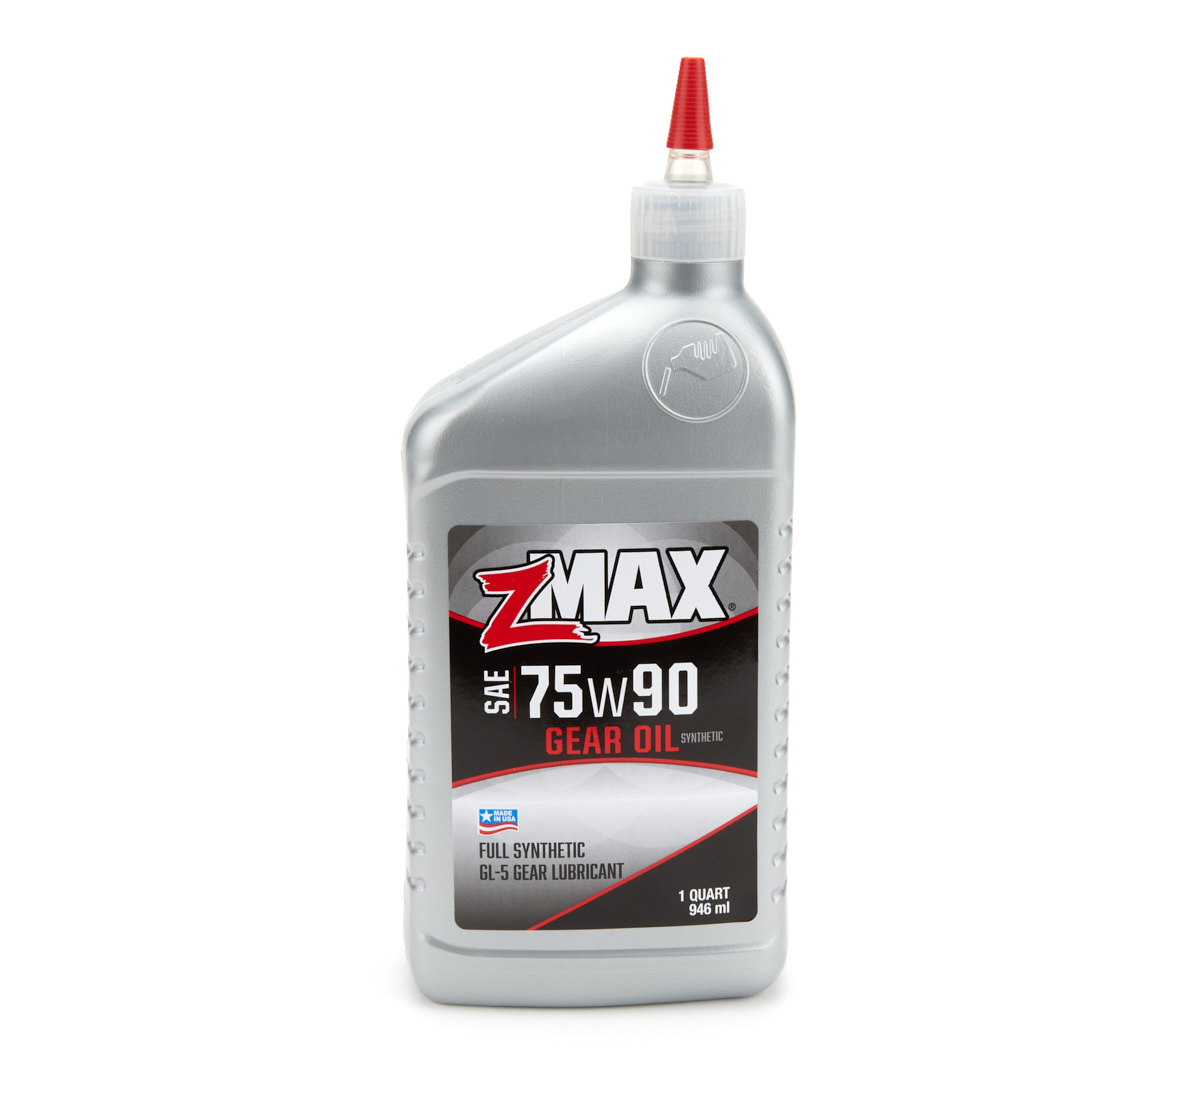 ZMAX Gear Oil 75W90 Limited Slip Additive Synthetic 1 qt Bottle Each